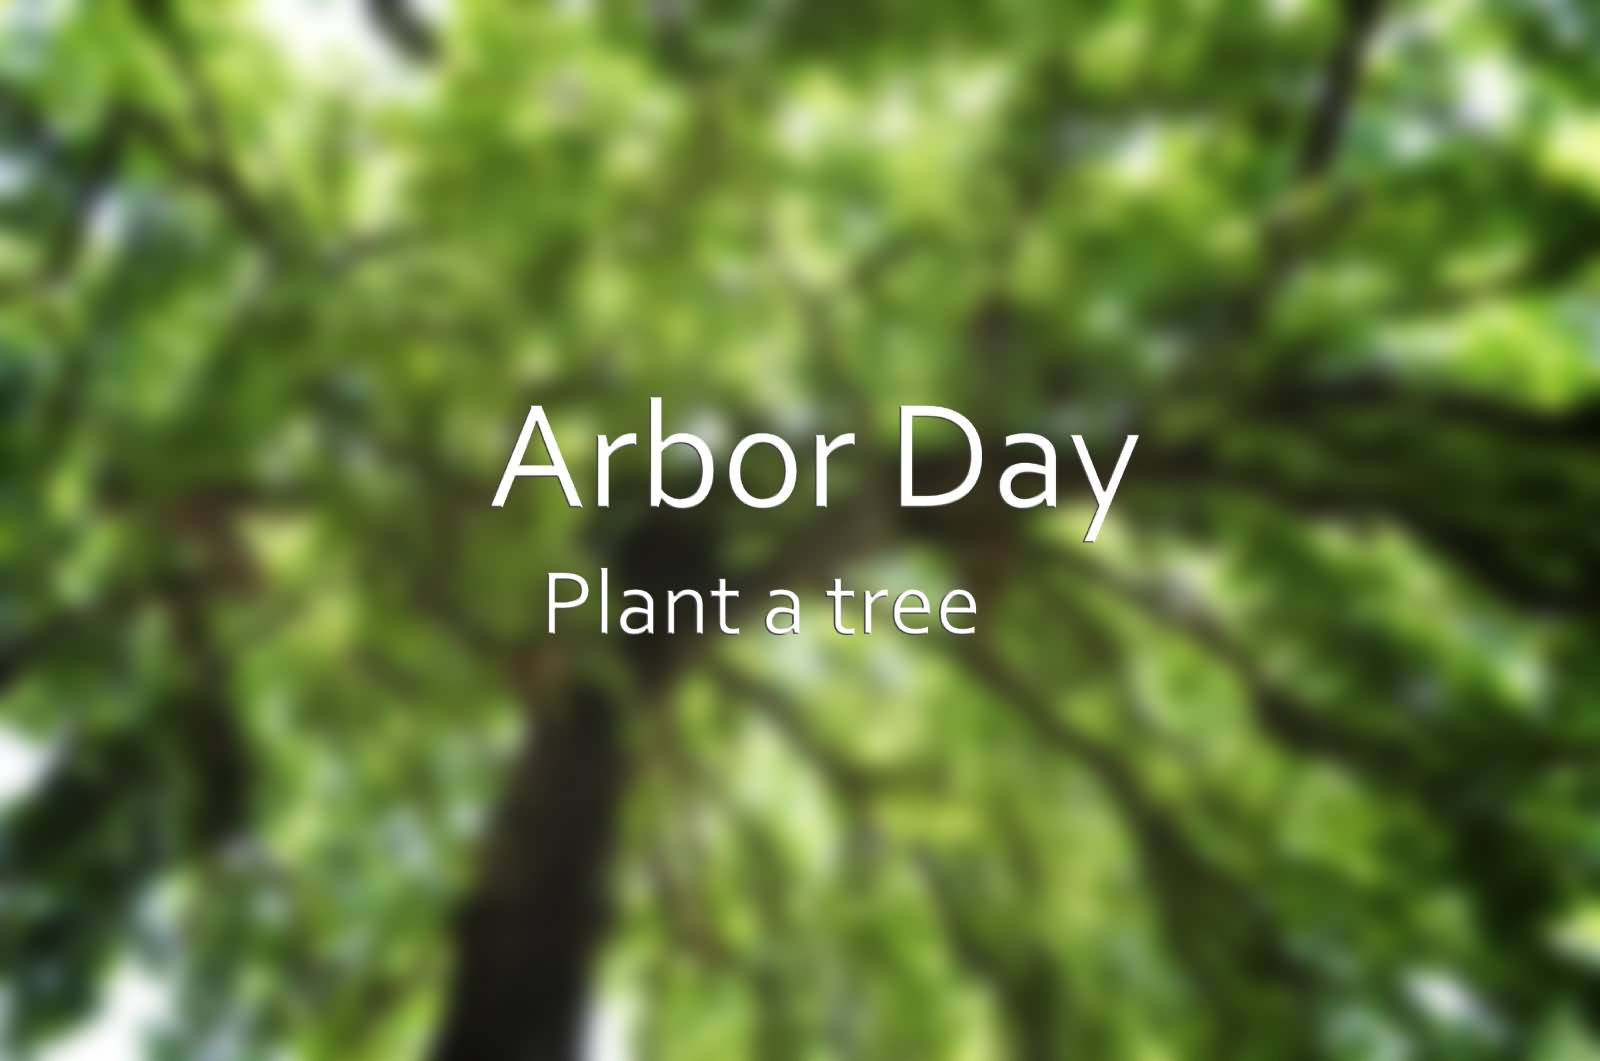 It's Arbor Day Plant A Tree